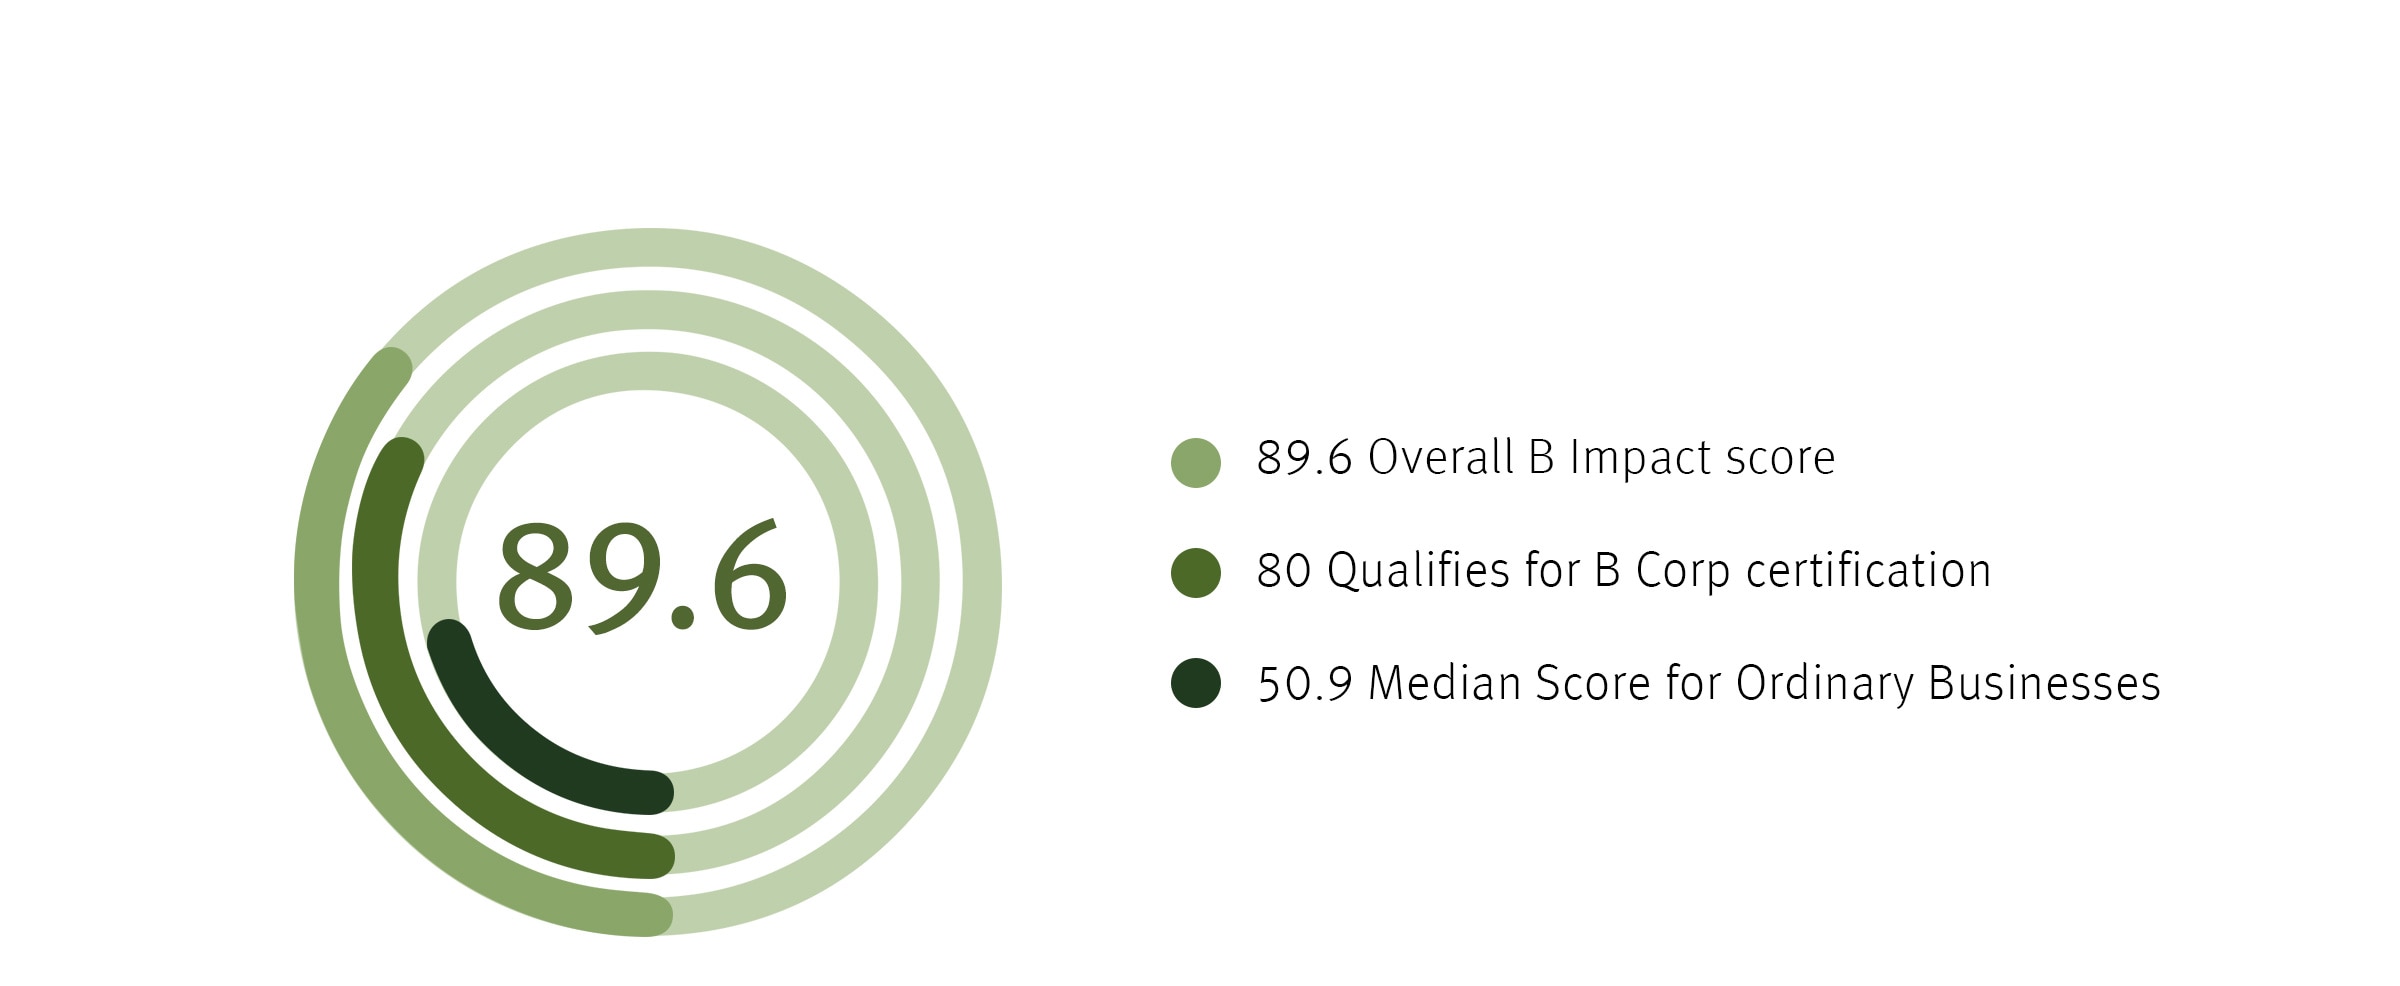 Aveda's overall B Impact Score is 89.6